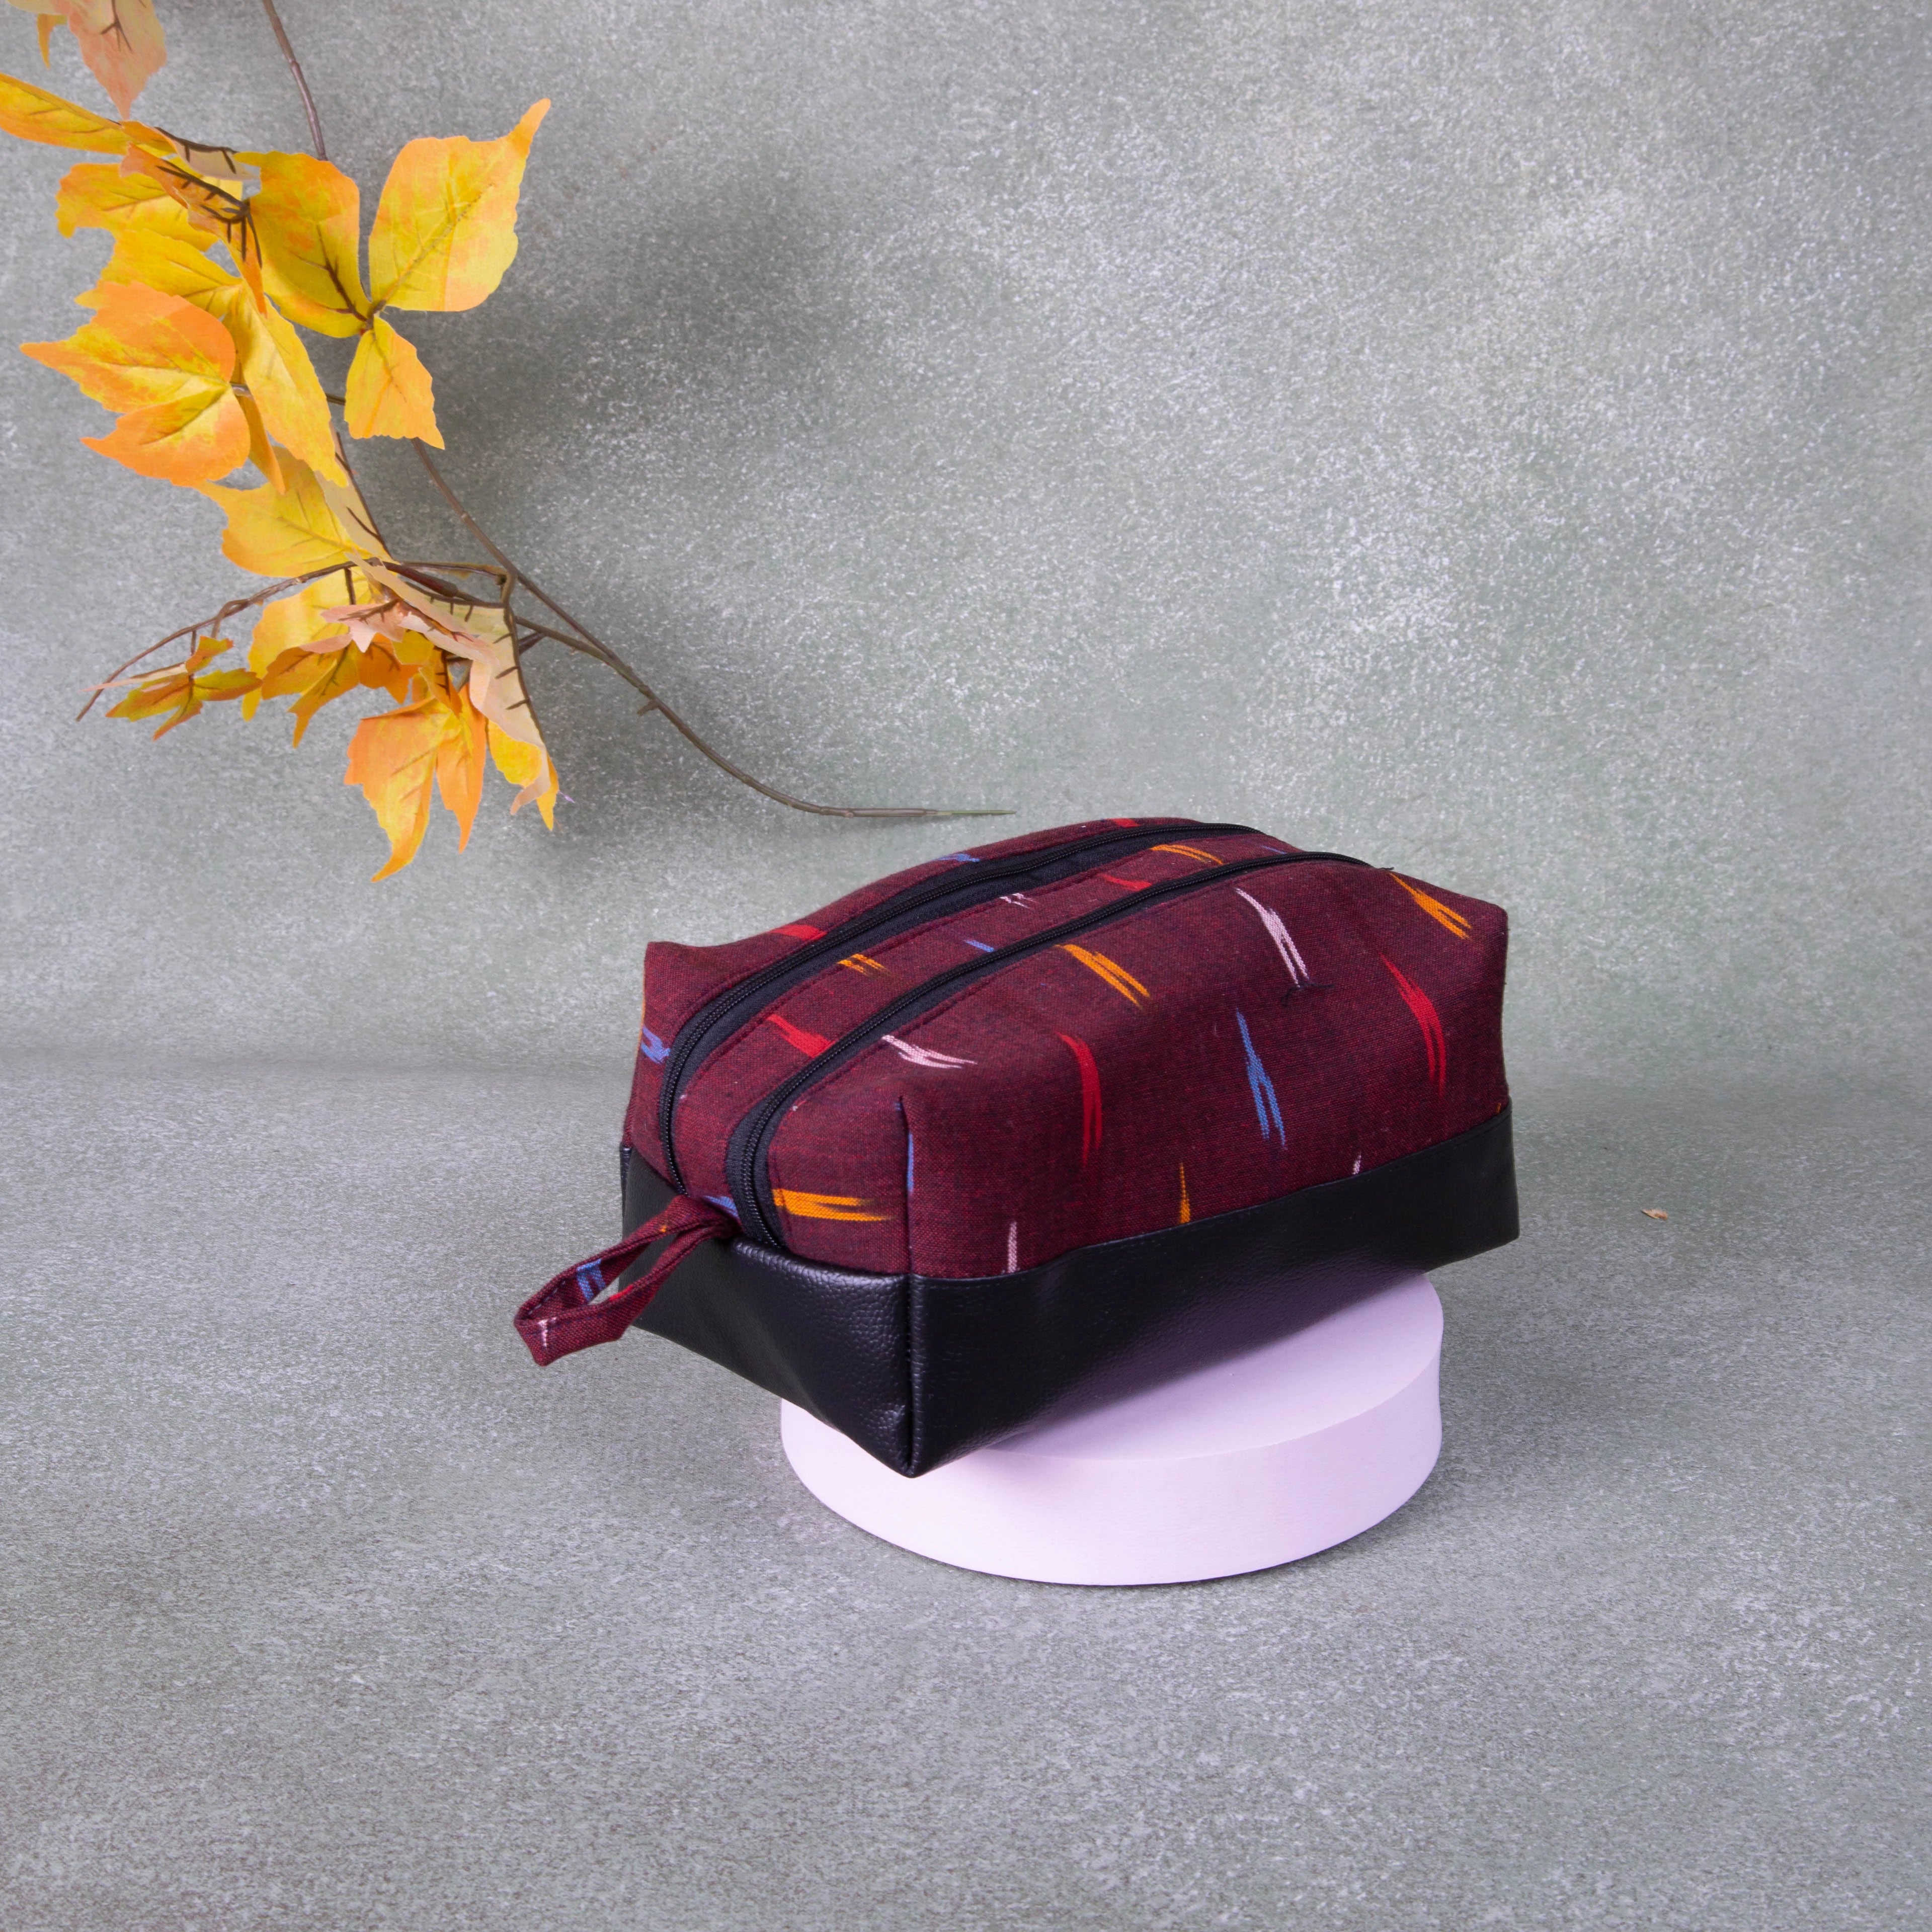 Double Zipper Women Leather Wallet Long Zipper Big Capacity Purse Handbag  Bag US | eBay